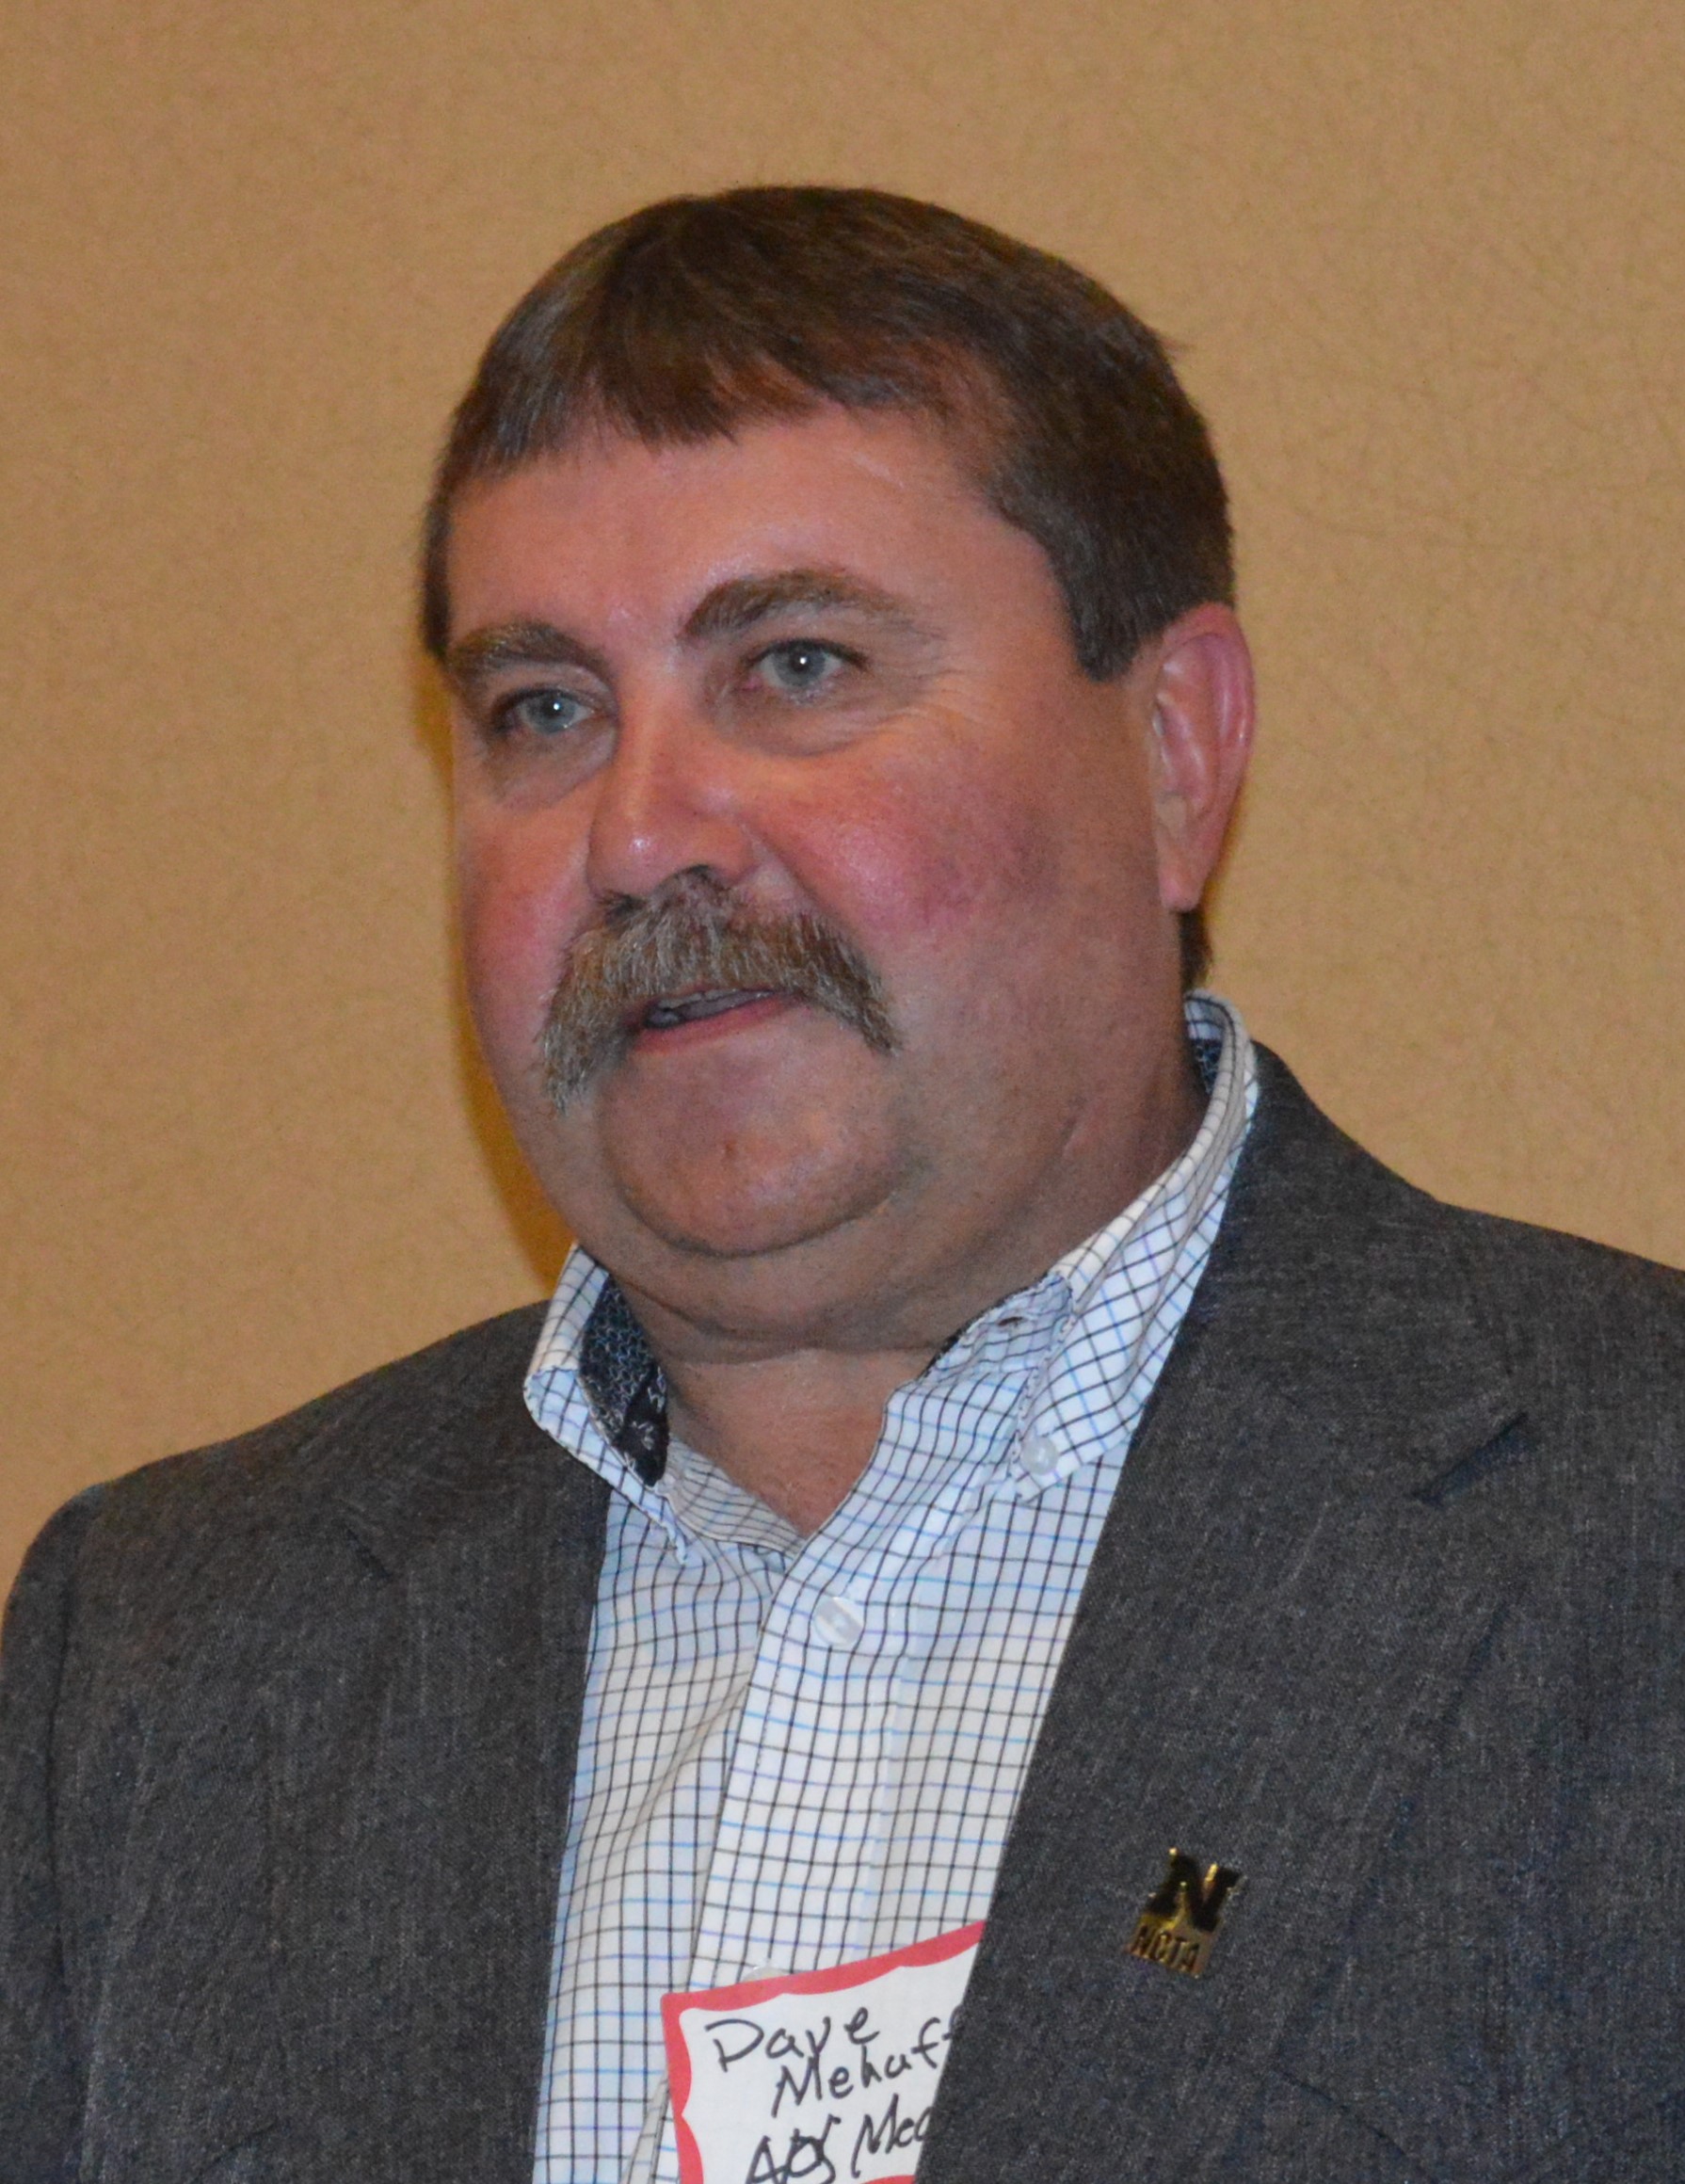 Dave Mehaffey, Ag Mech '93, is president of the Aggie Alumni Association